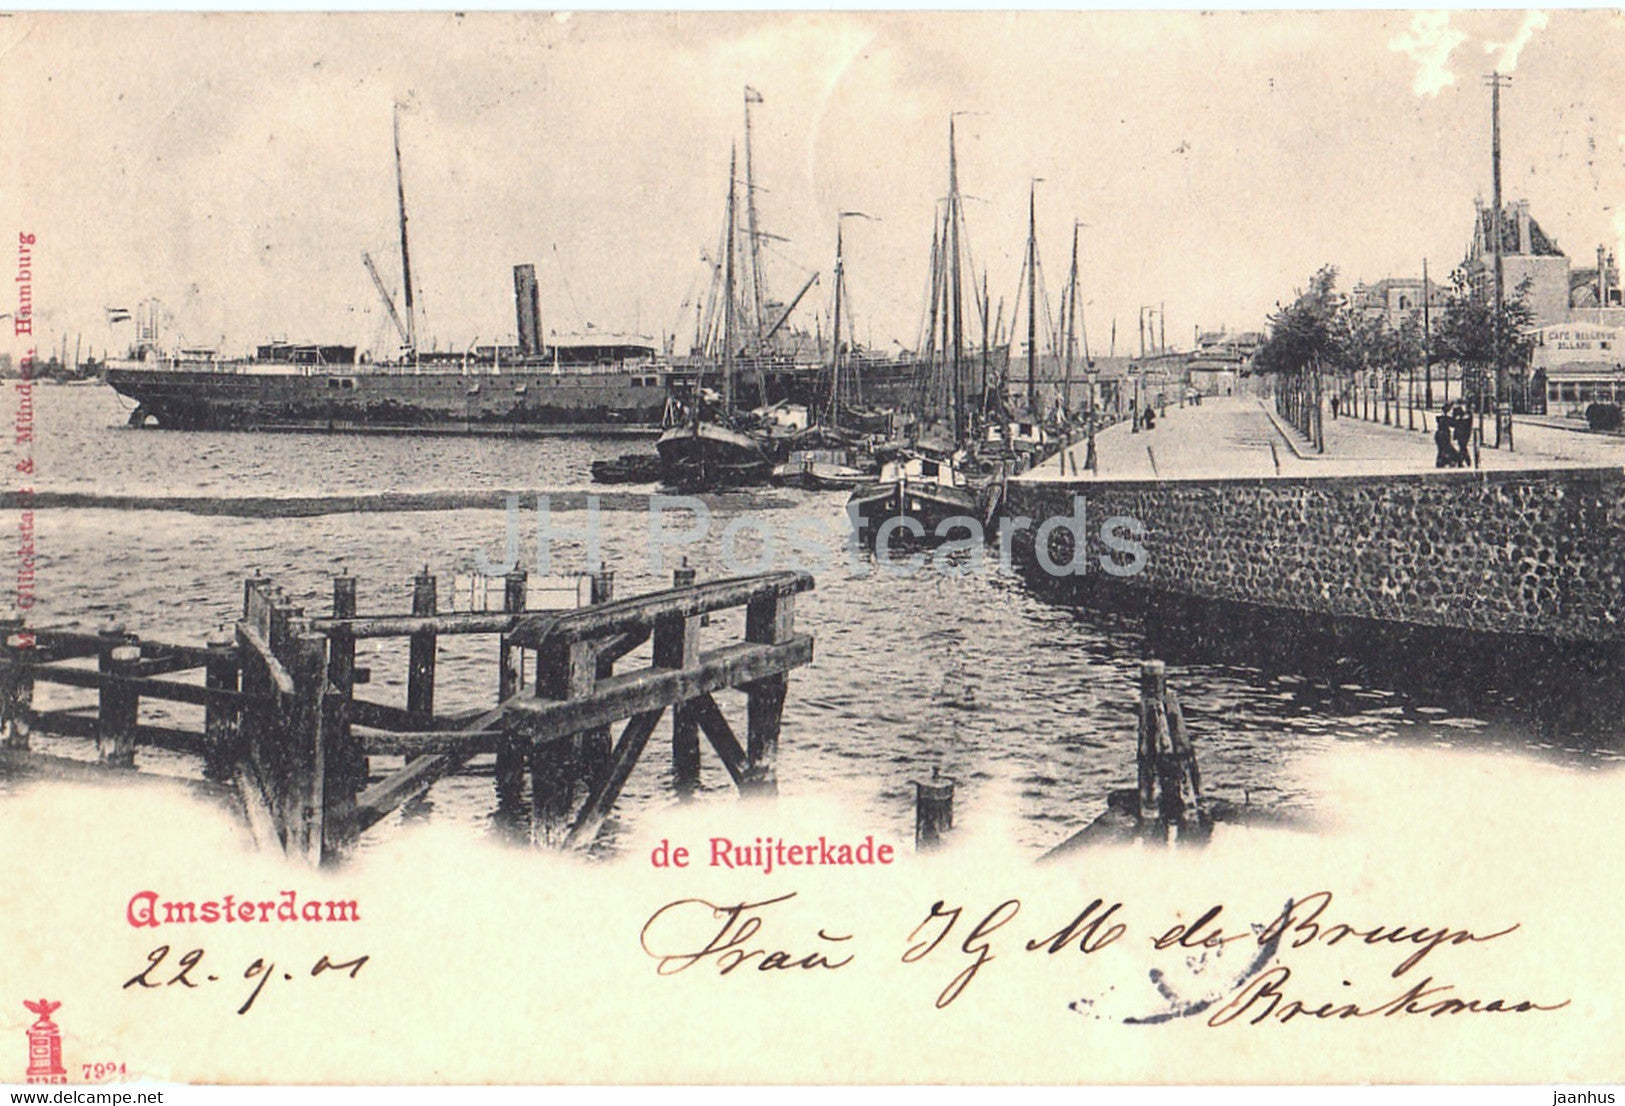 Amsterdam - de Ruijterkade - ship - old postcard - 1901 - Netherlands - used - JH Postcards